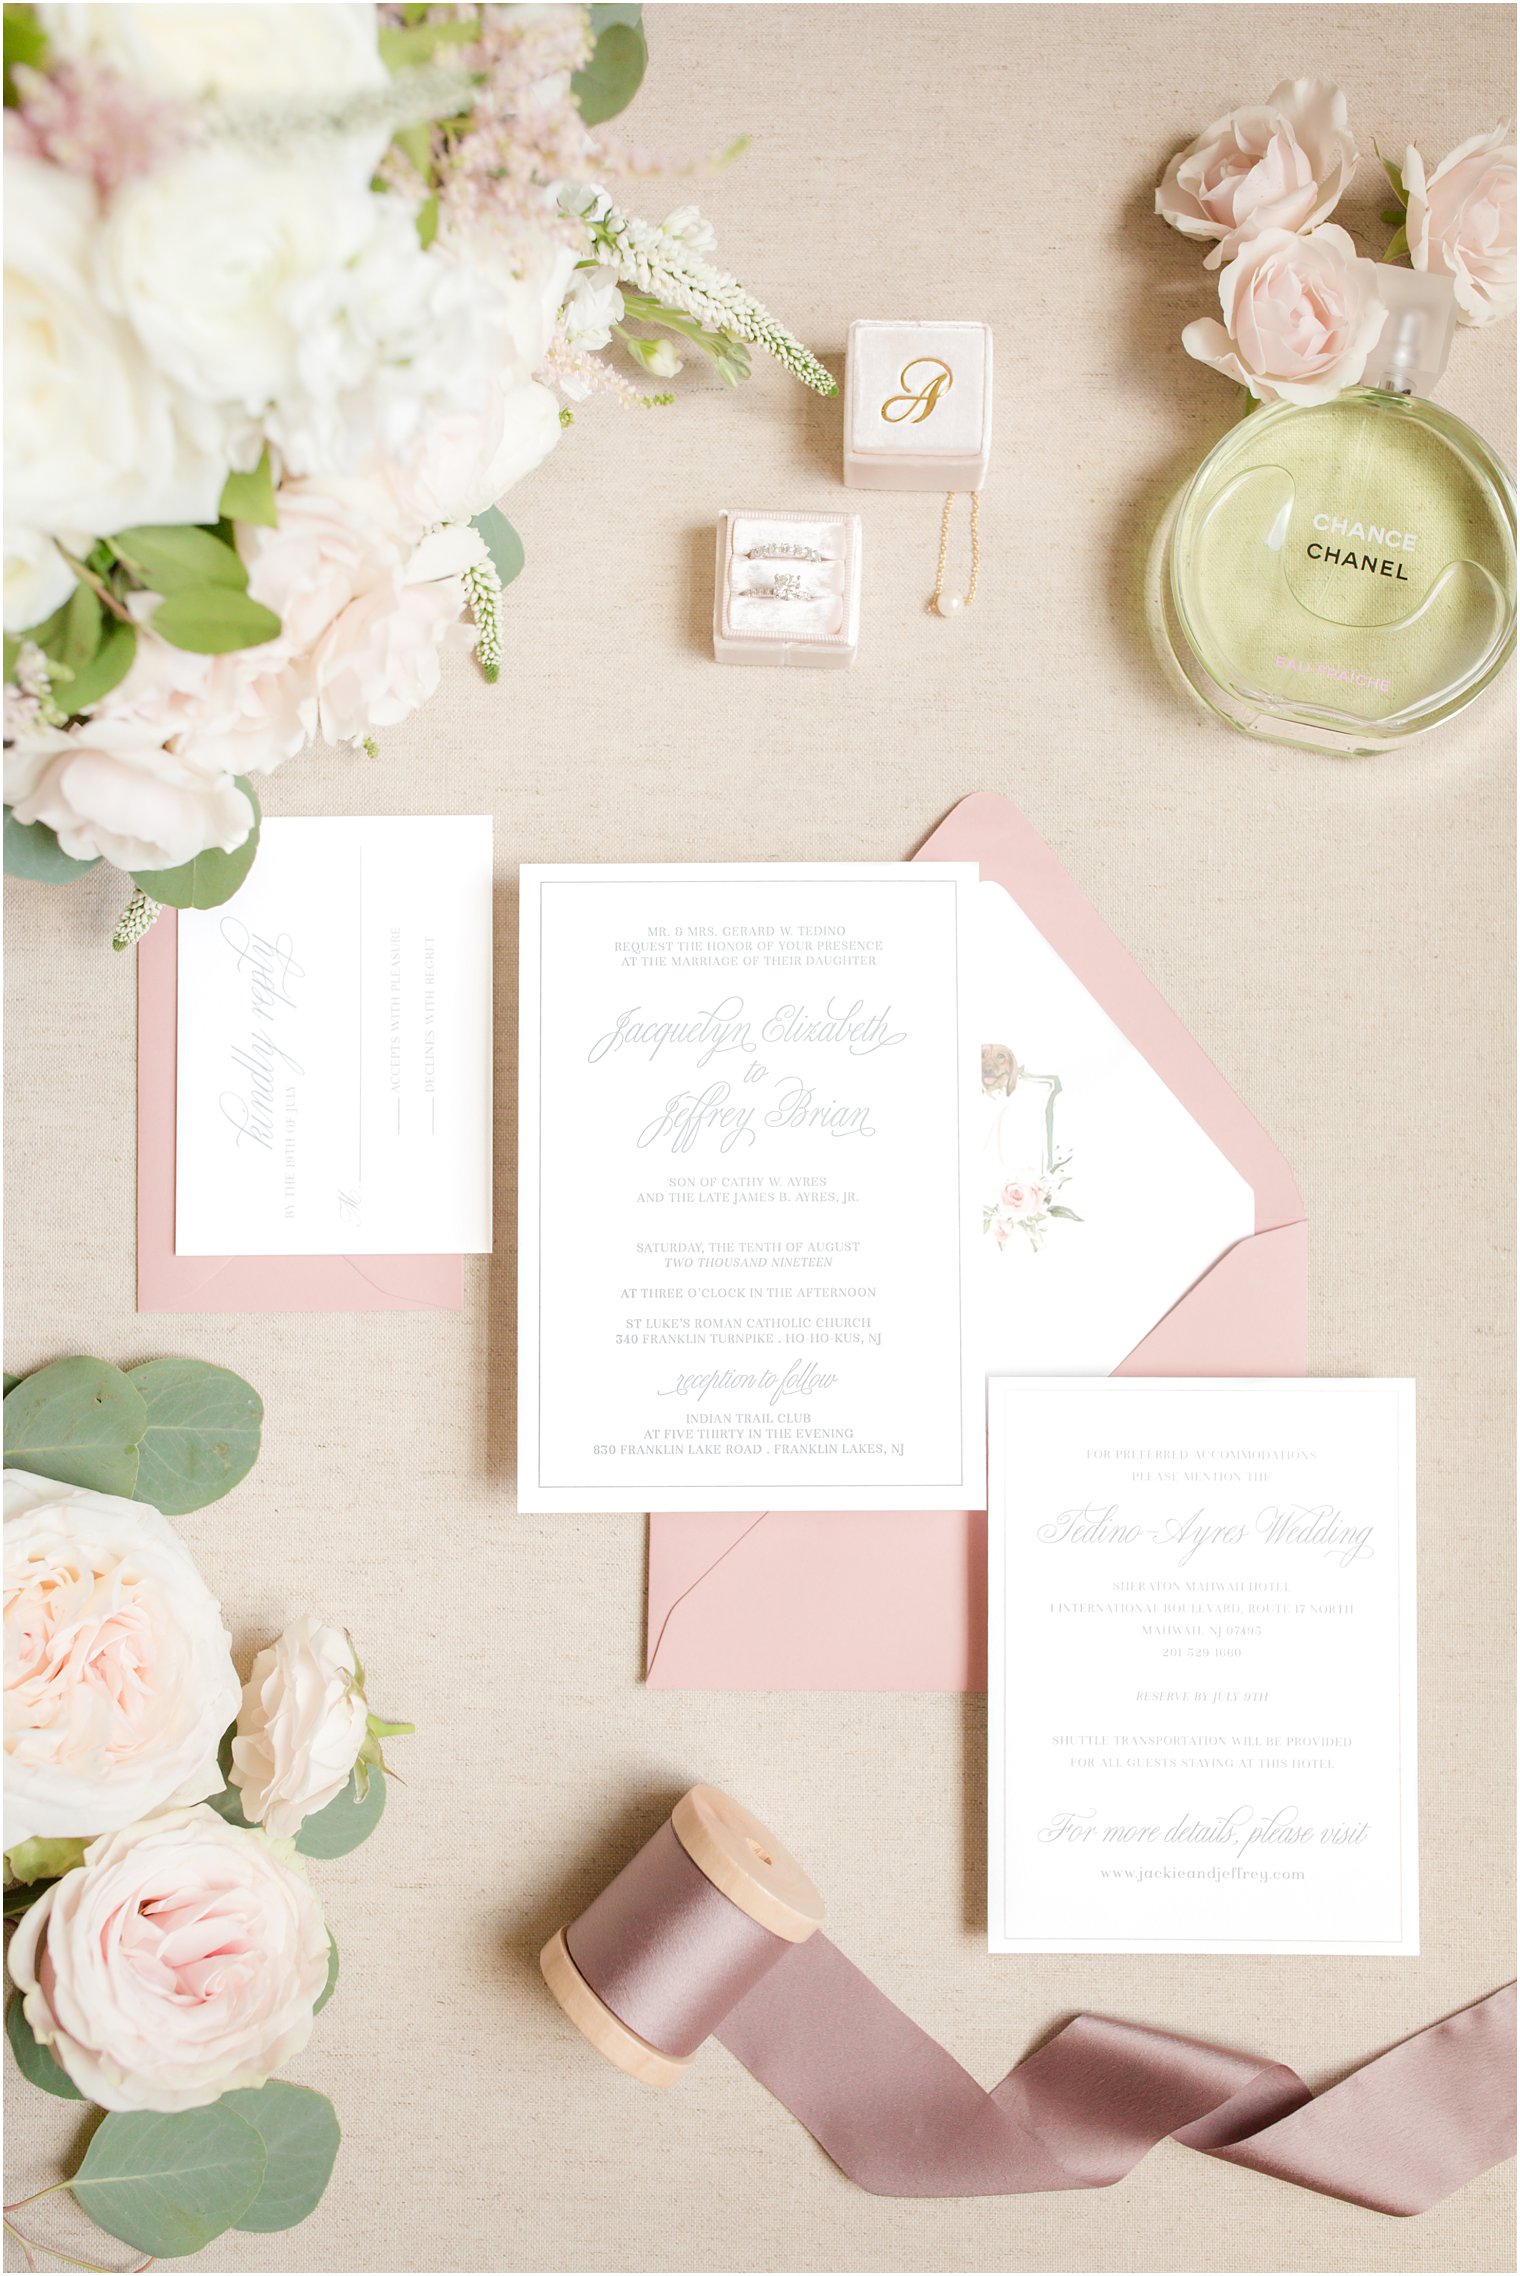 Wedding invitations by Narrative Designs Co.